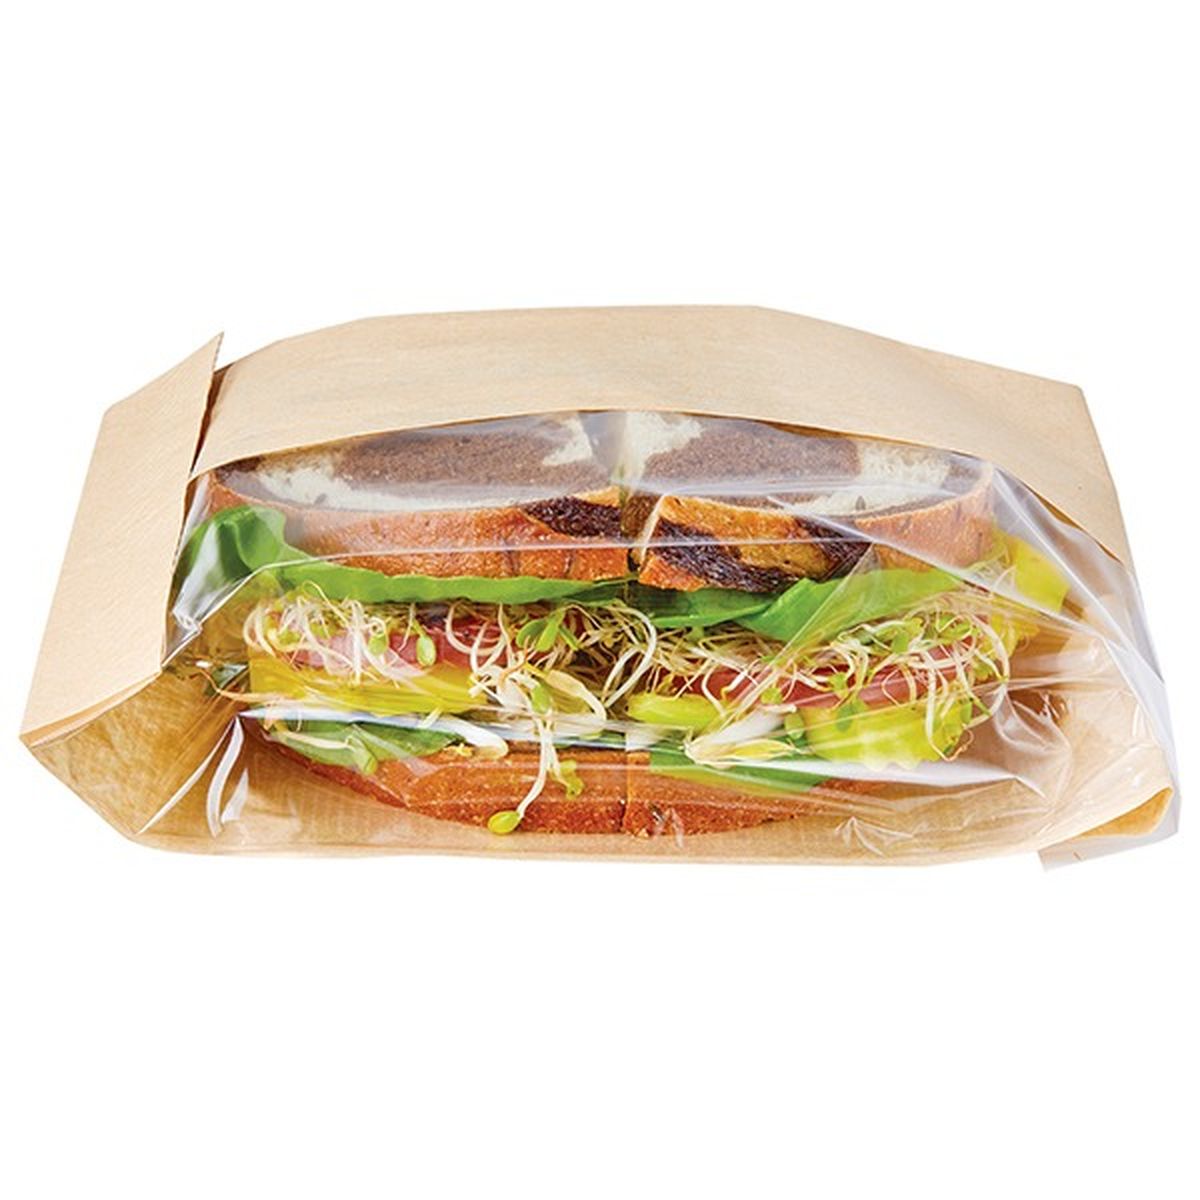 Calories in Wegmans Veggie Crunch Sandwich